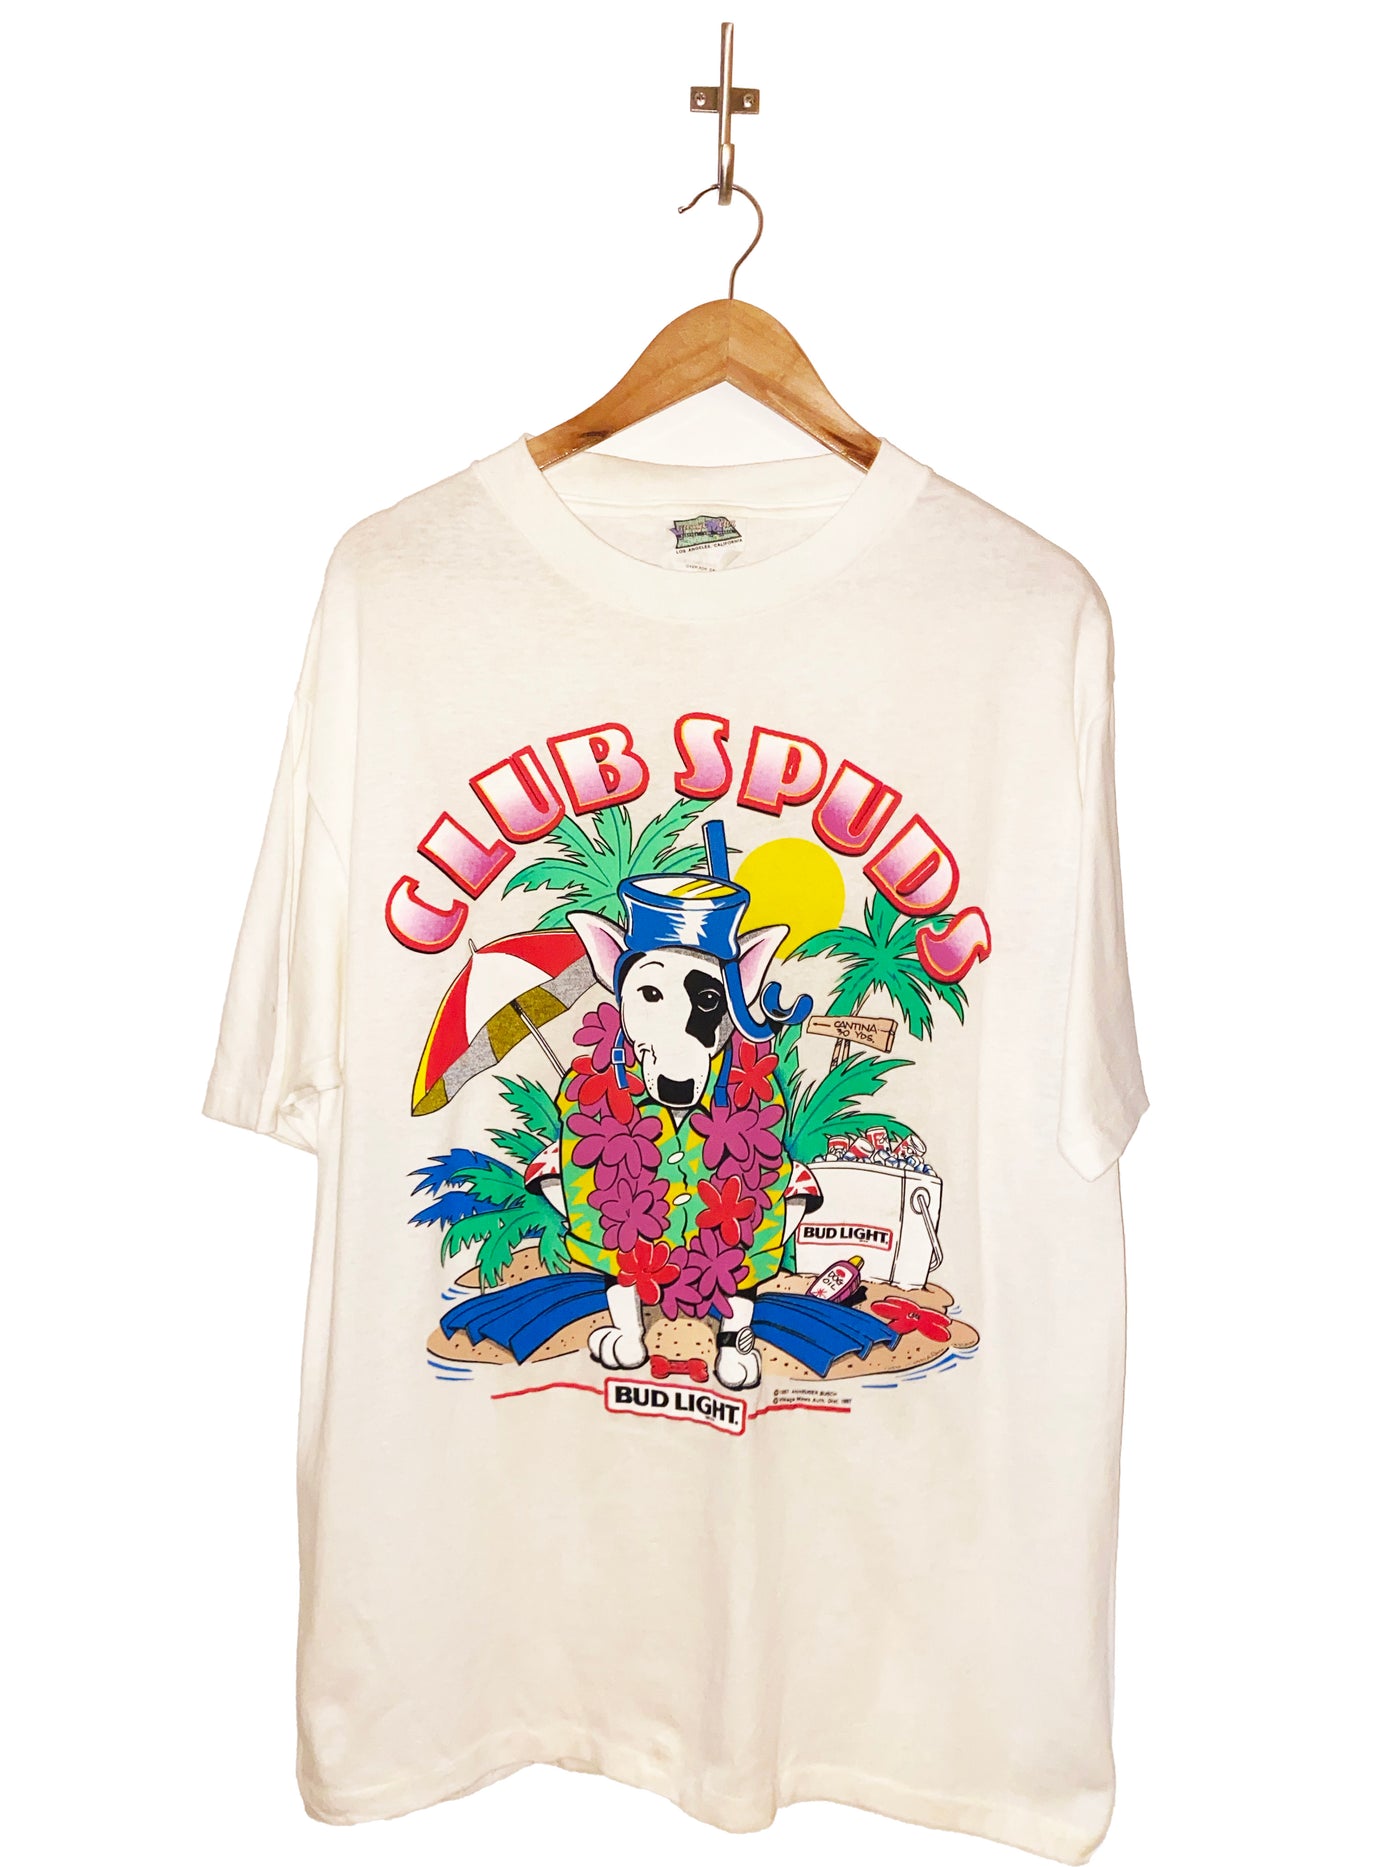 Vintage 1987 Club Spuds Bud Light Puff Print Promo T-Shirt